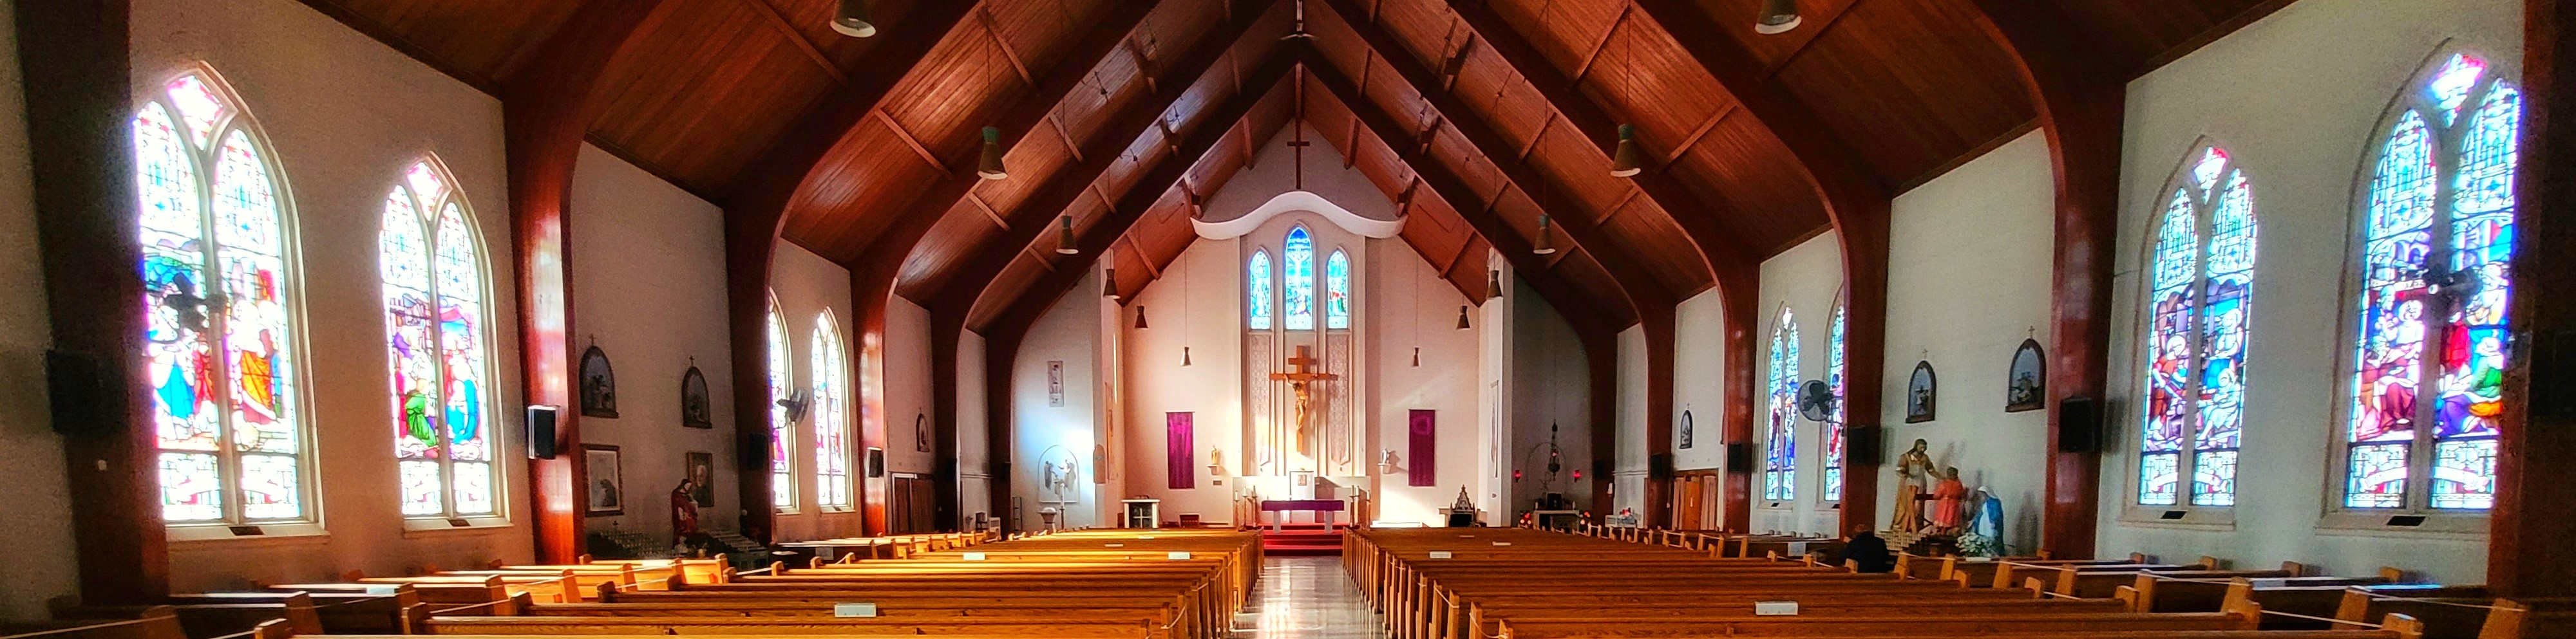 Inside the Church